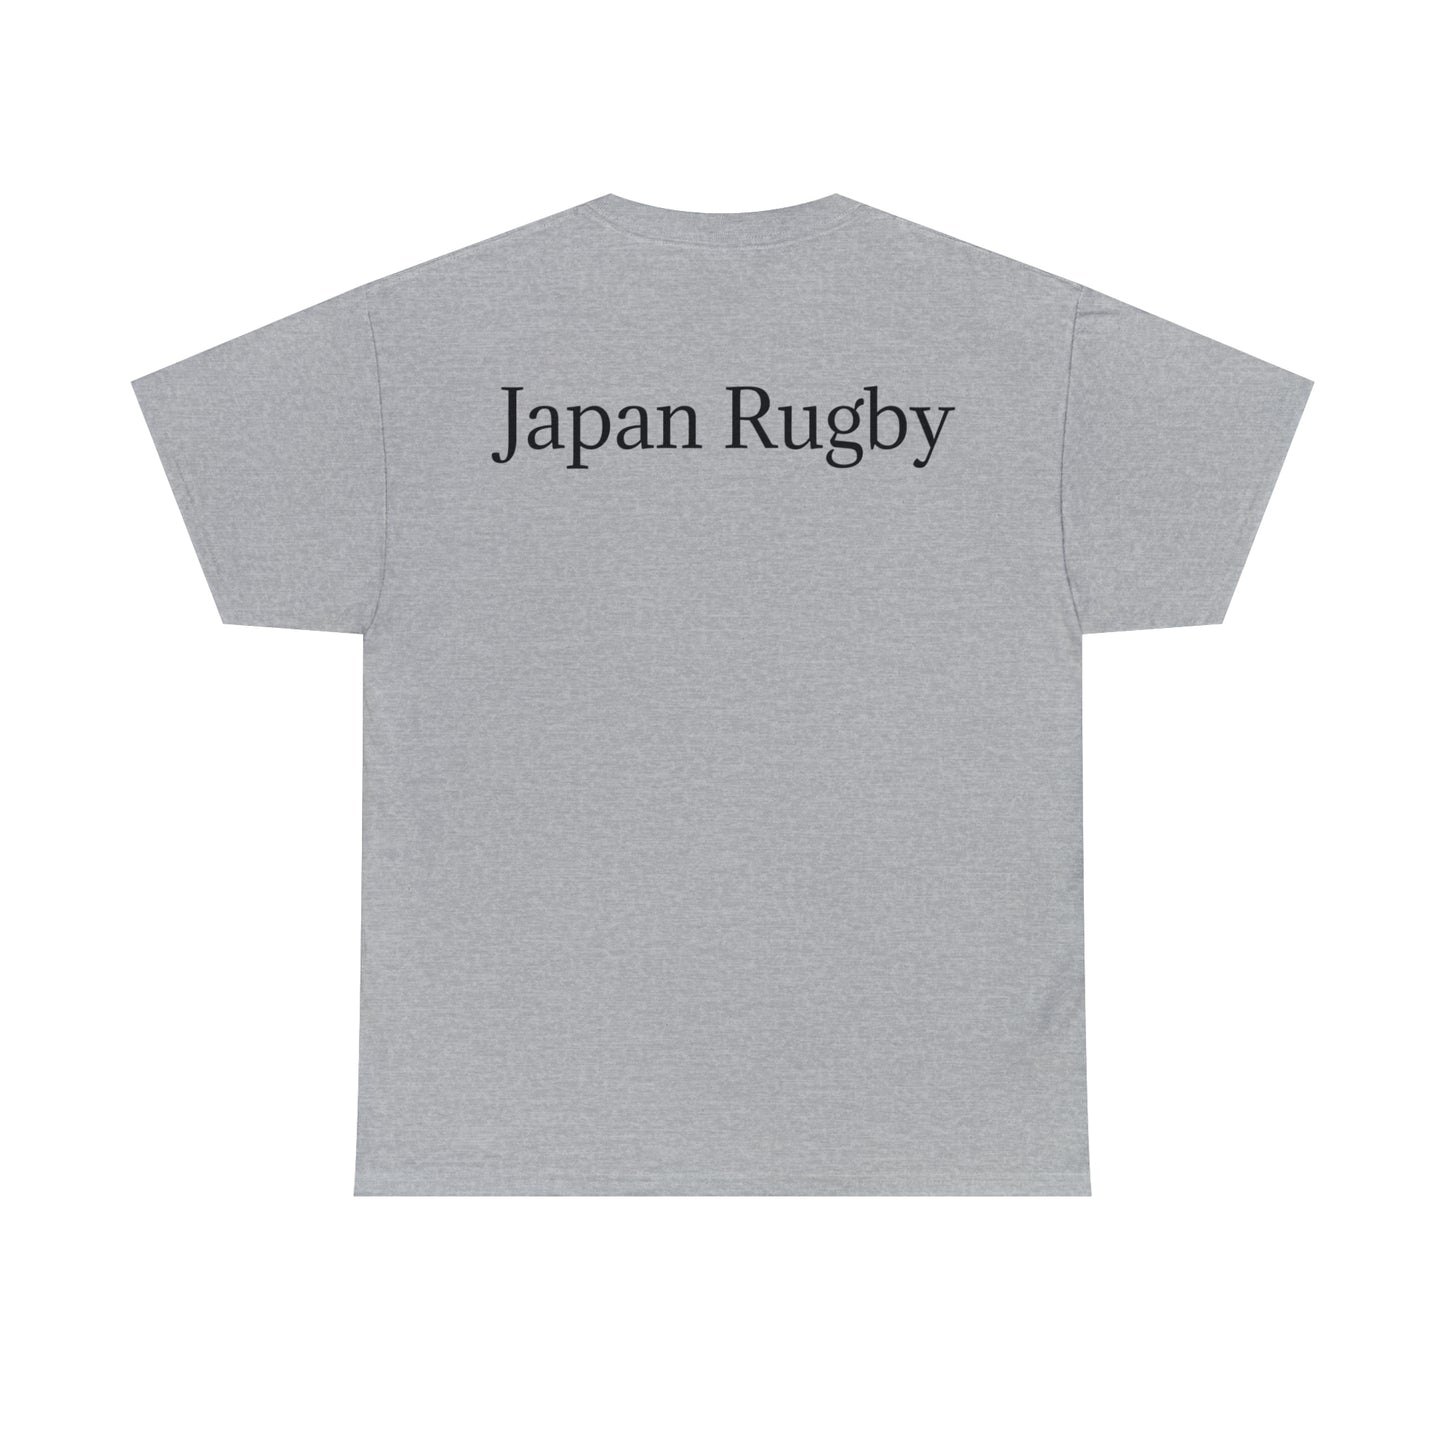 Rugby Samurai - light shirts